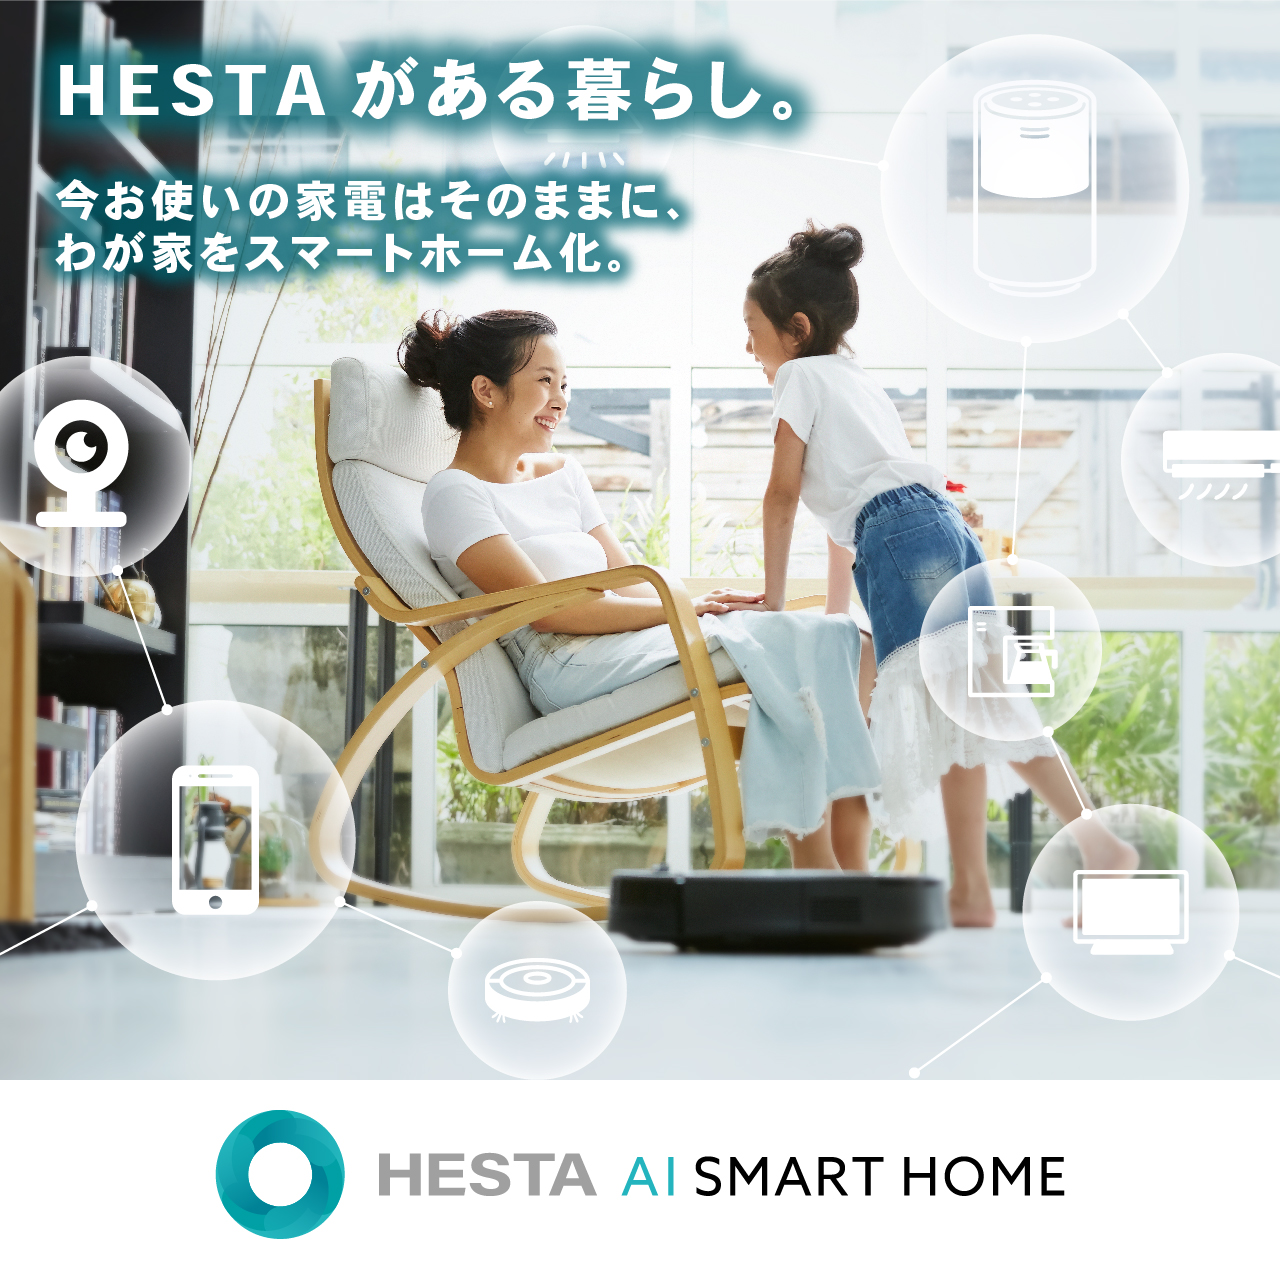 HESTA AI SMART HOME